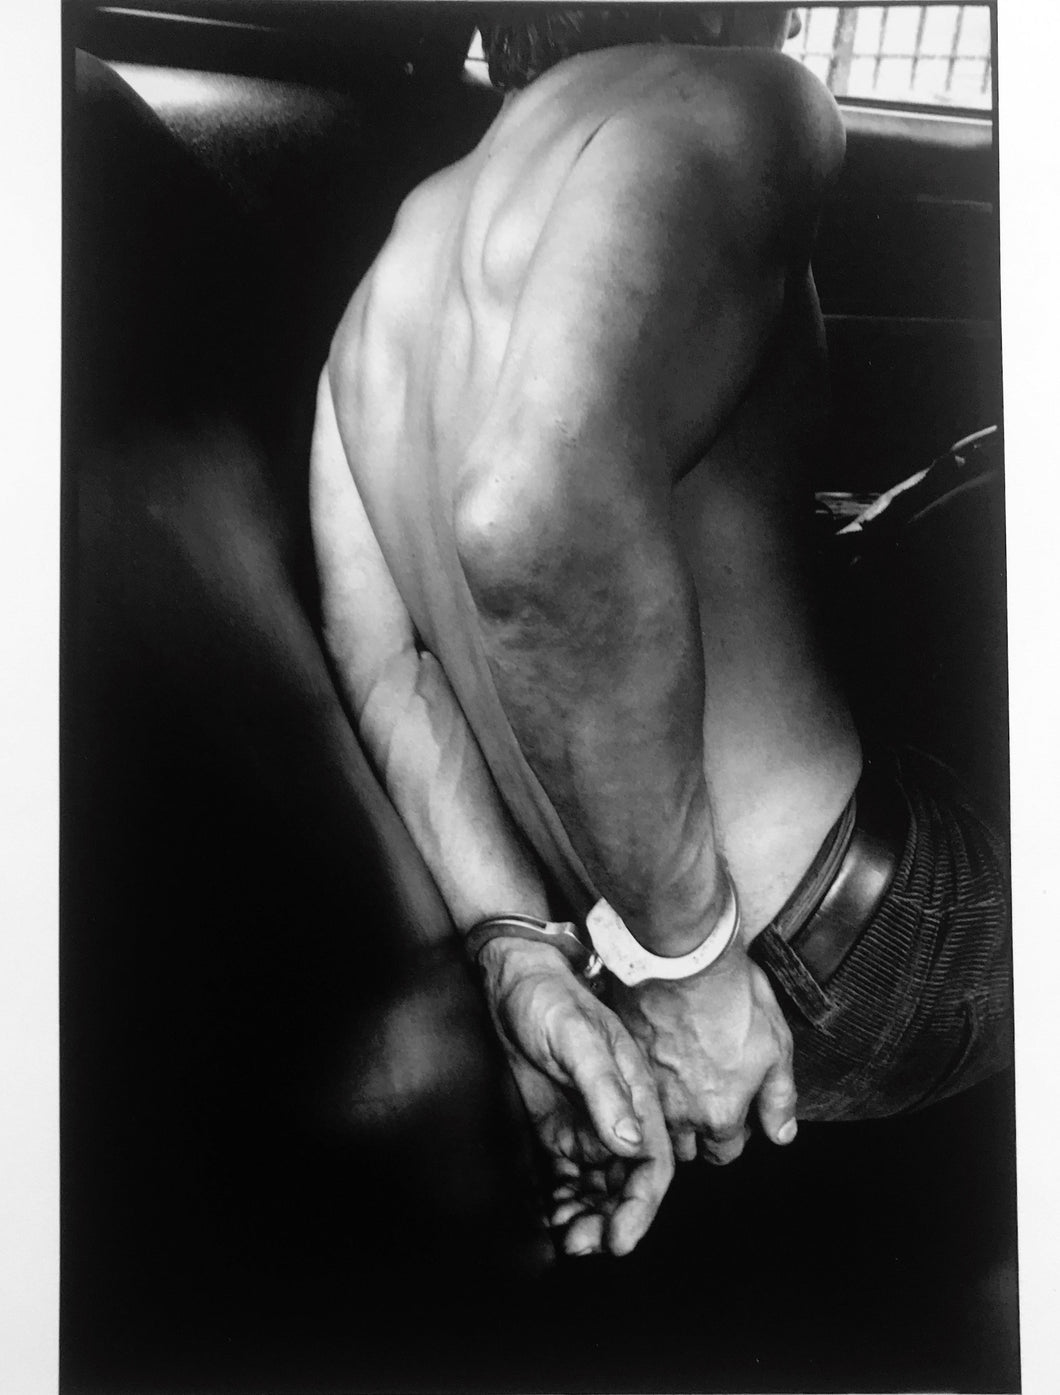 Handcuffed, New York City, Black & White Documentary Photography 1970s by Leonard Freed